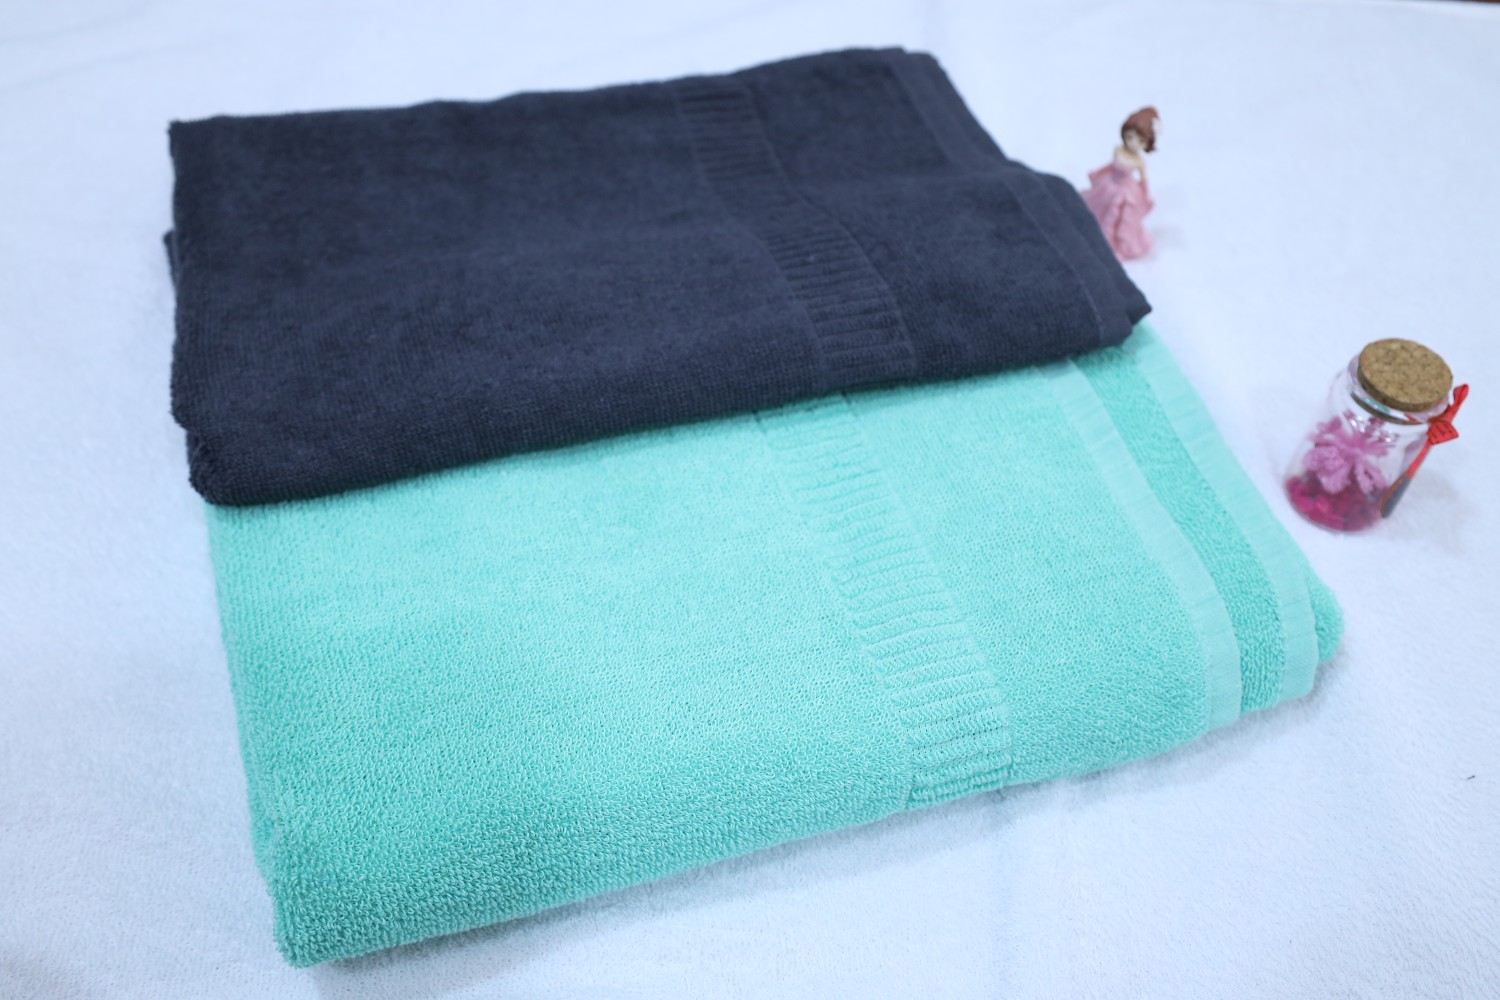 Taurusent Super Soft 100% Cotton High Absorbing Turkey Bath Towel, Size: 30x60 inches (450 GSM) - Pack of 2 (Dark Blue & Aqua)